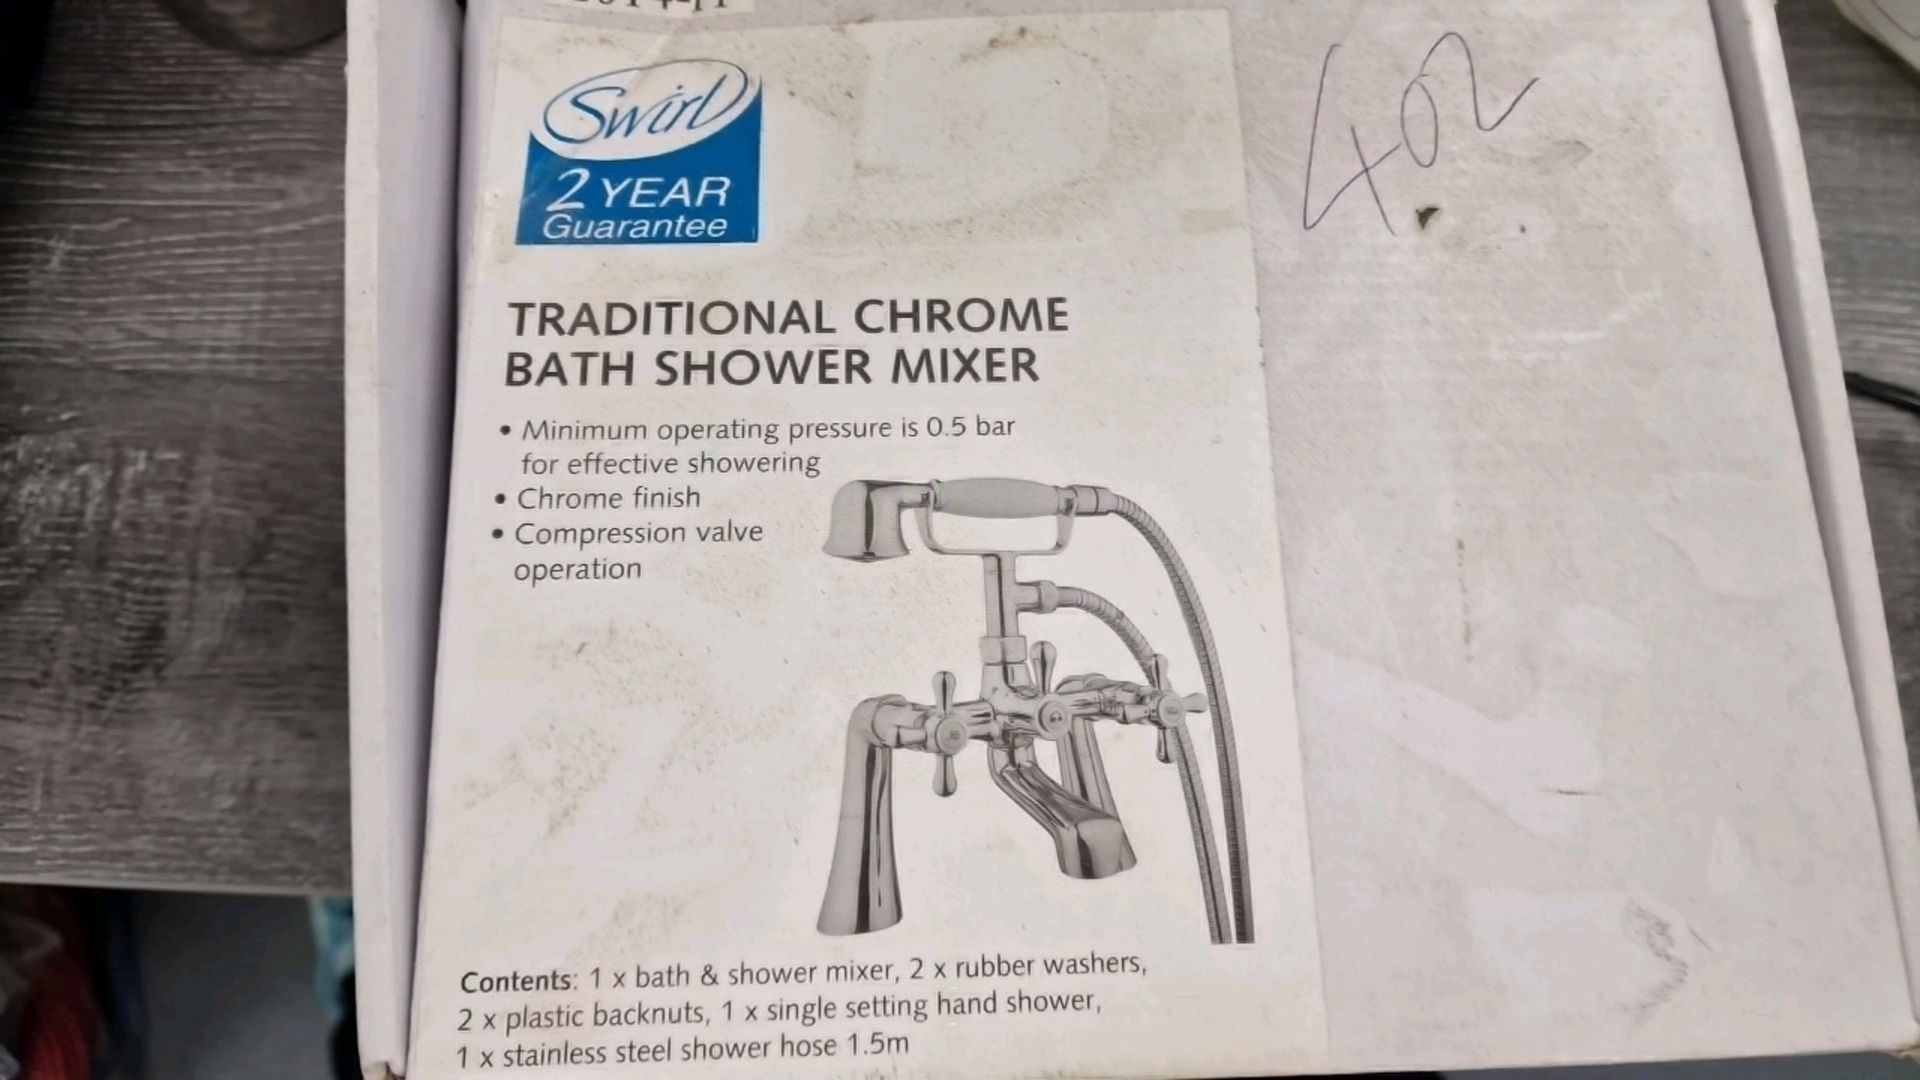 Swirl Bath Shower Mixer - Image 4 of 4